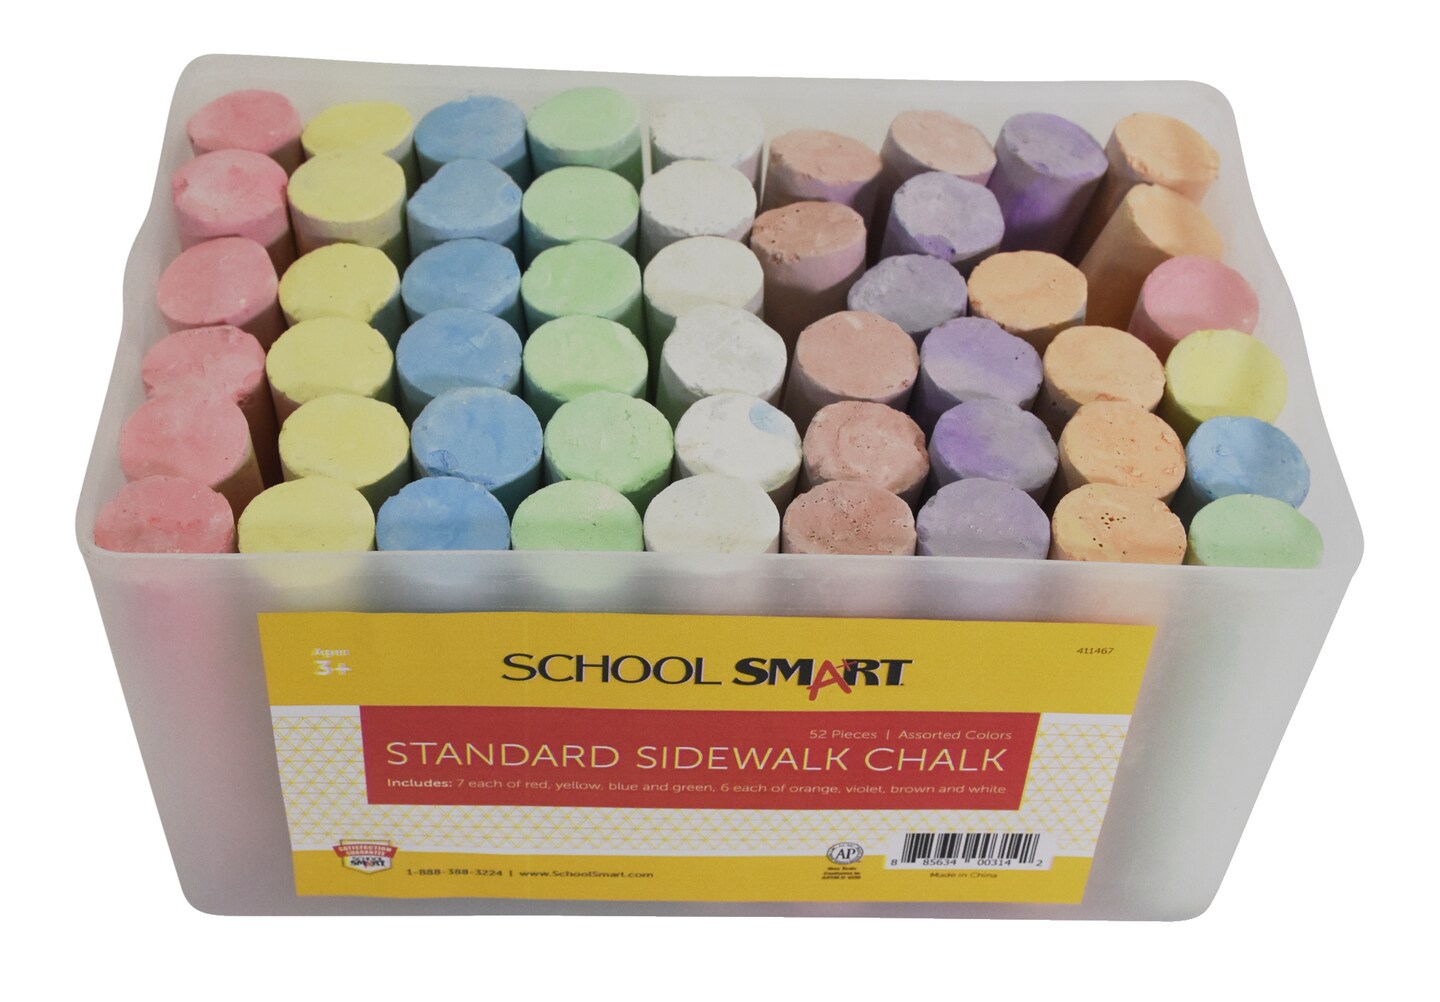 School Smart Sidewalk Chalk Tub, Assorted Colors, Pack of 52